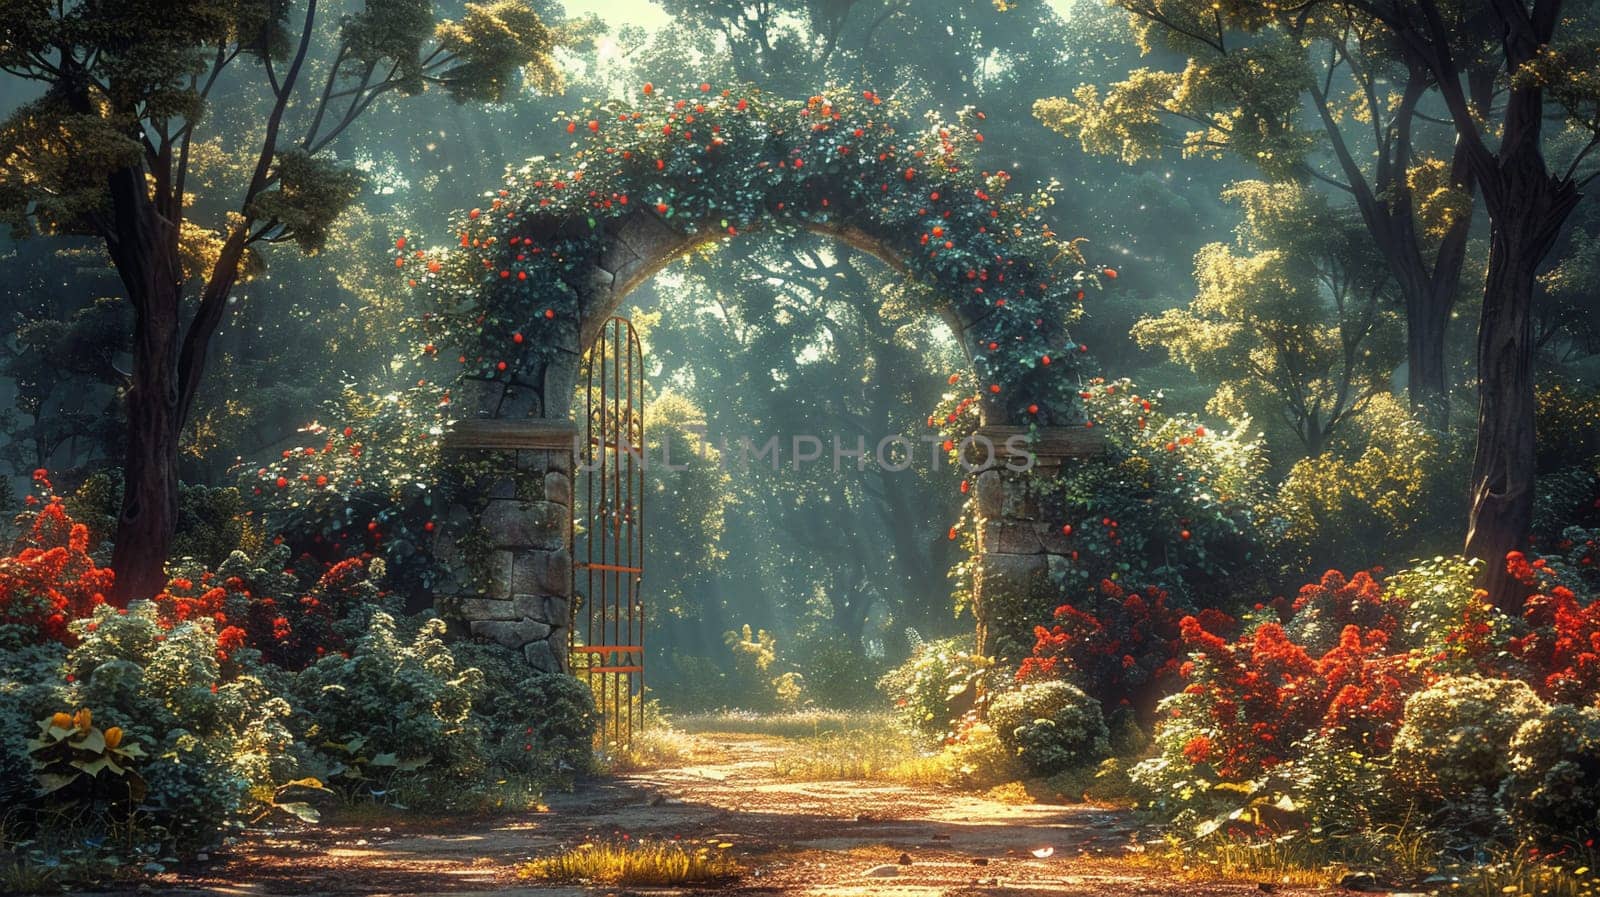 Secret garden gate partially open inviting exploration by Benzoix